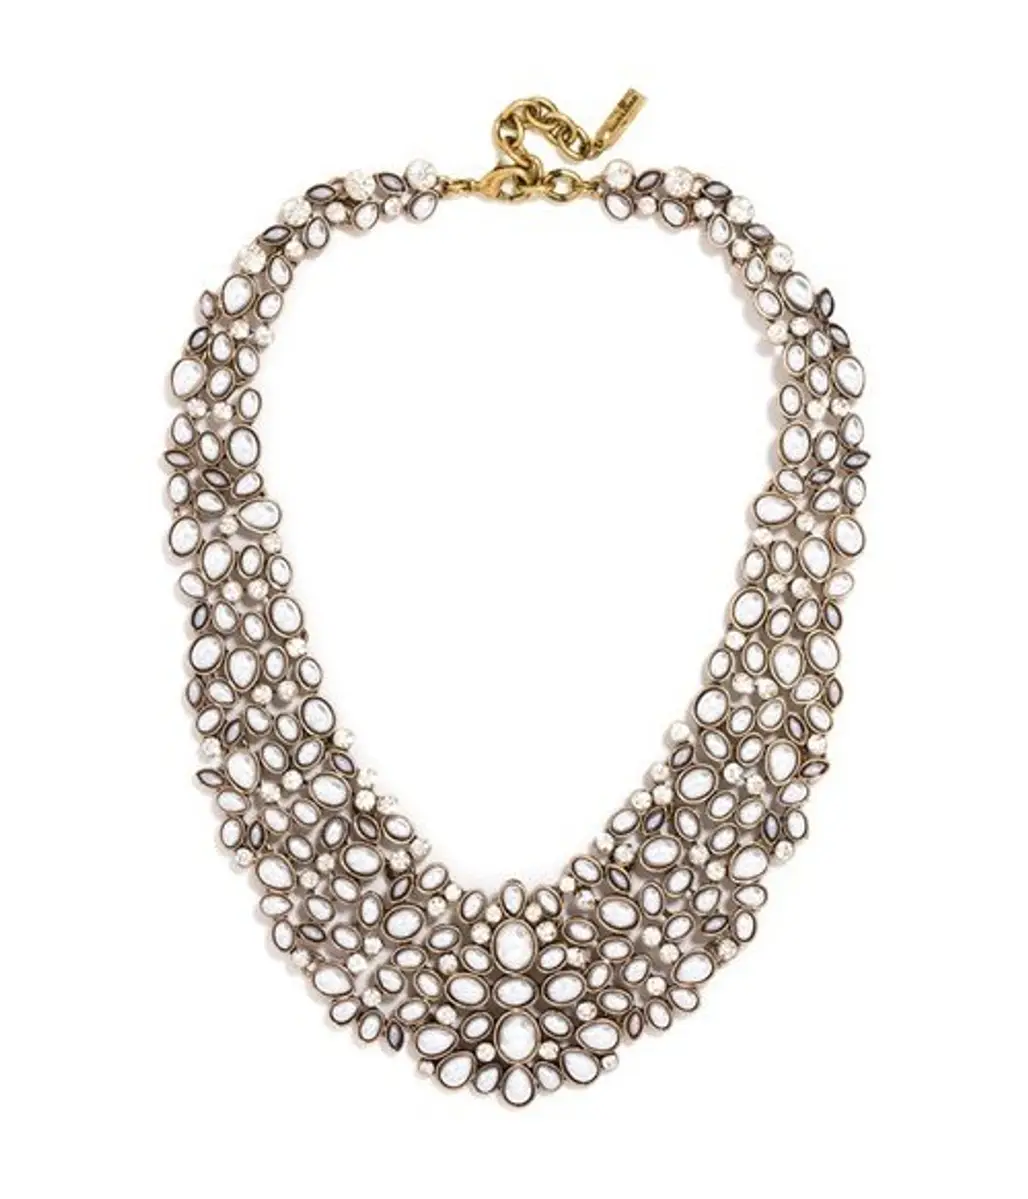 jewellery,necklace,fashion accessory,chain,pearl,